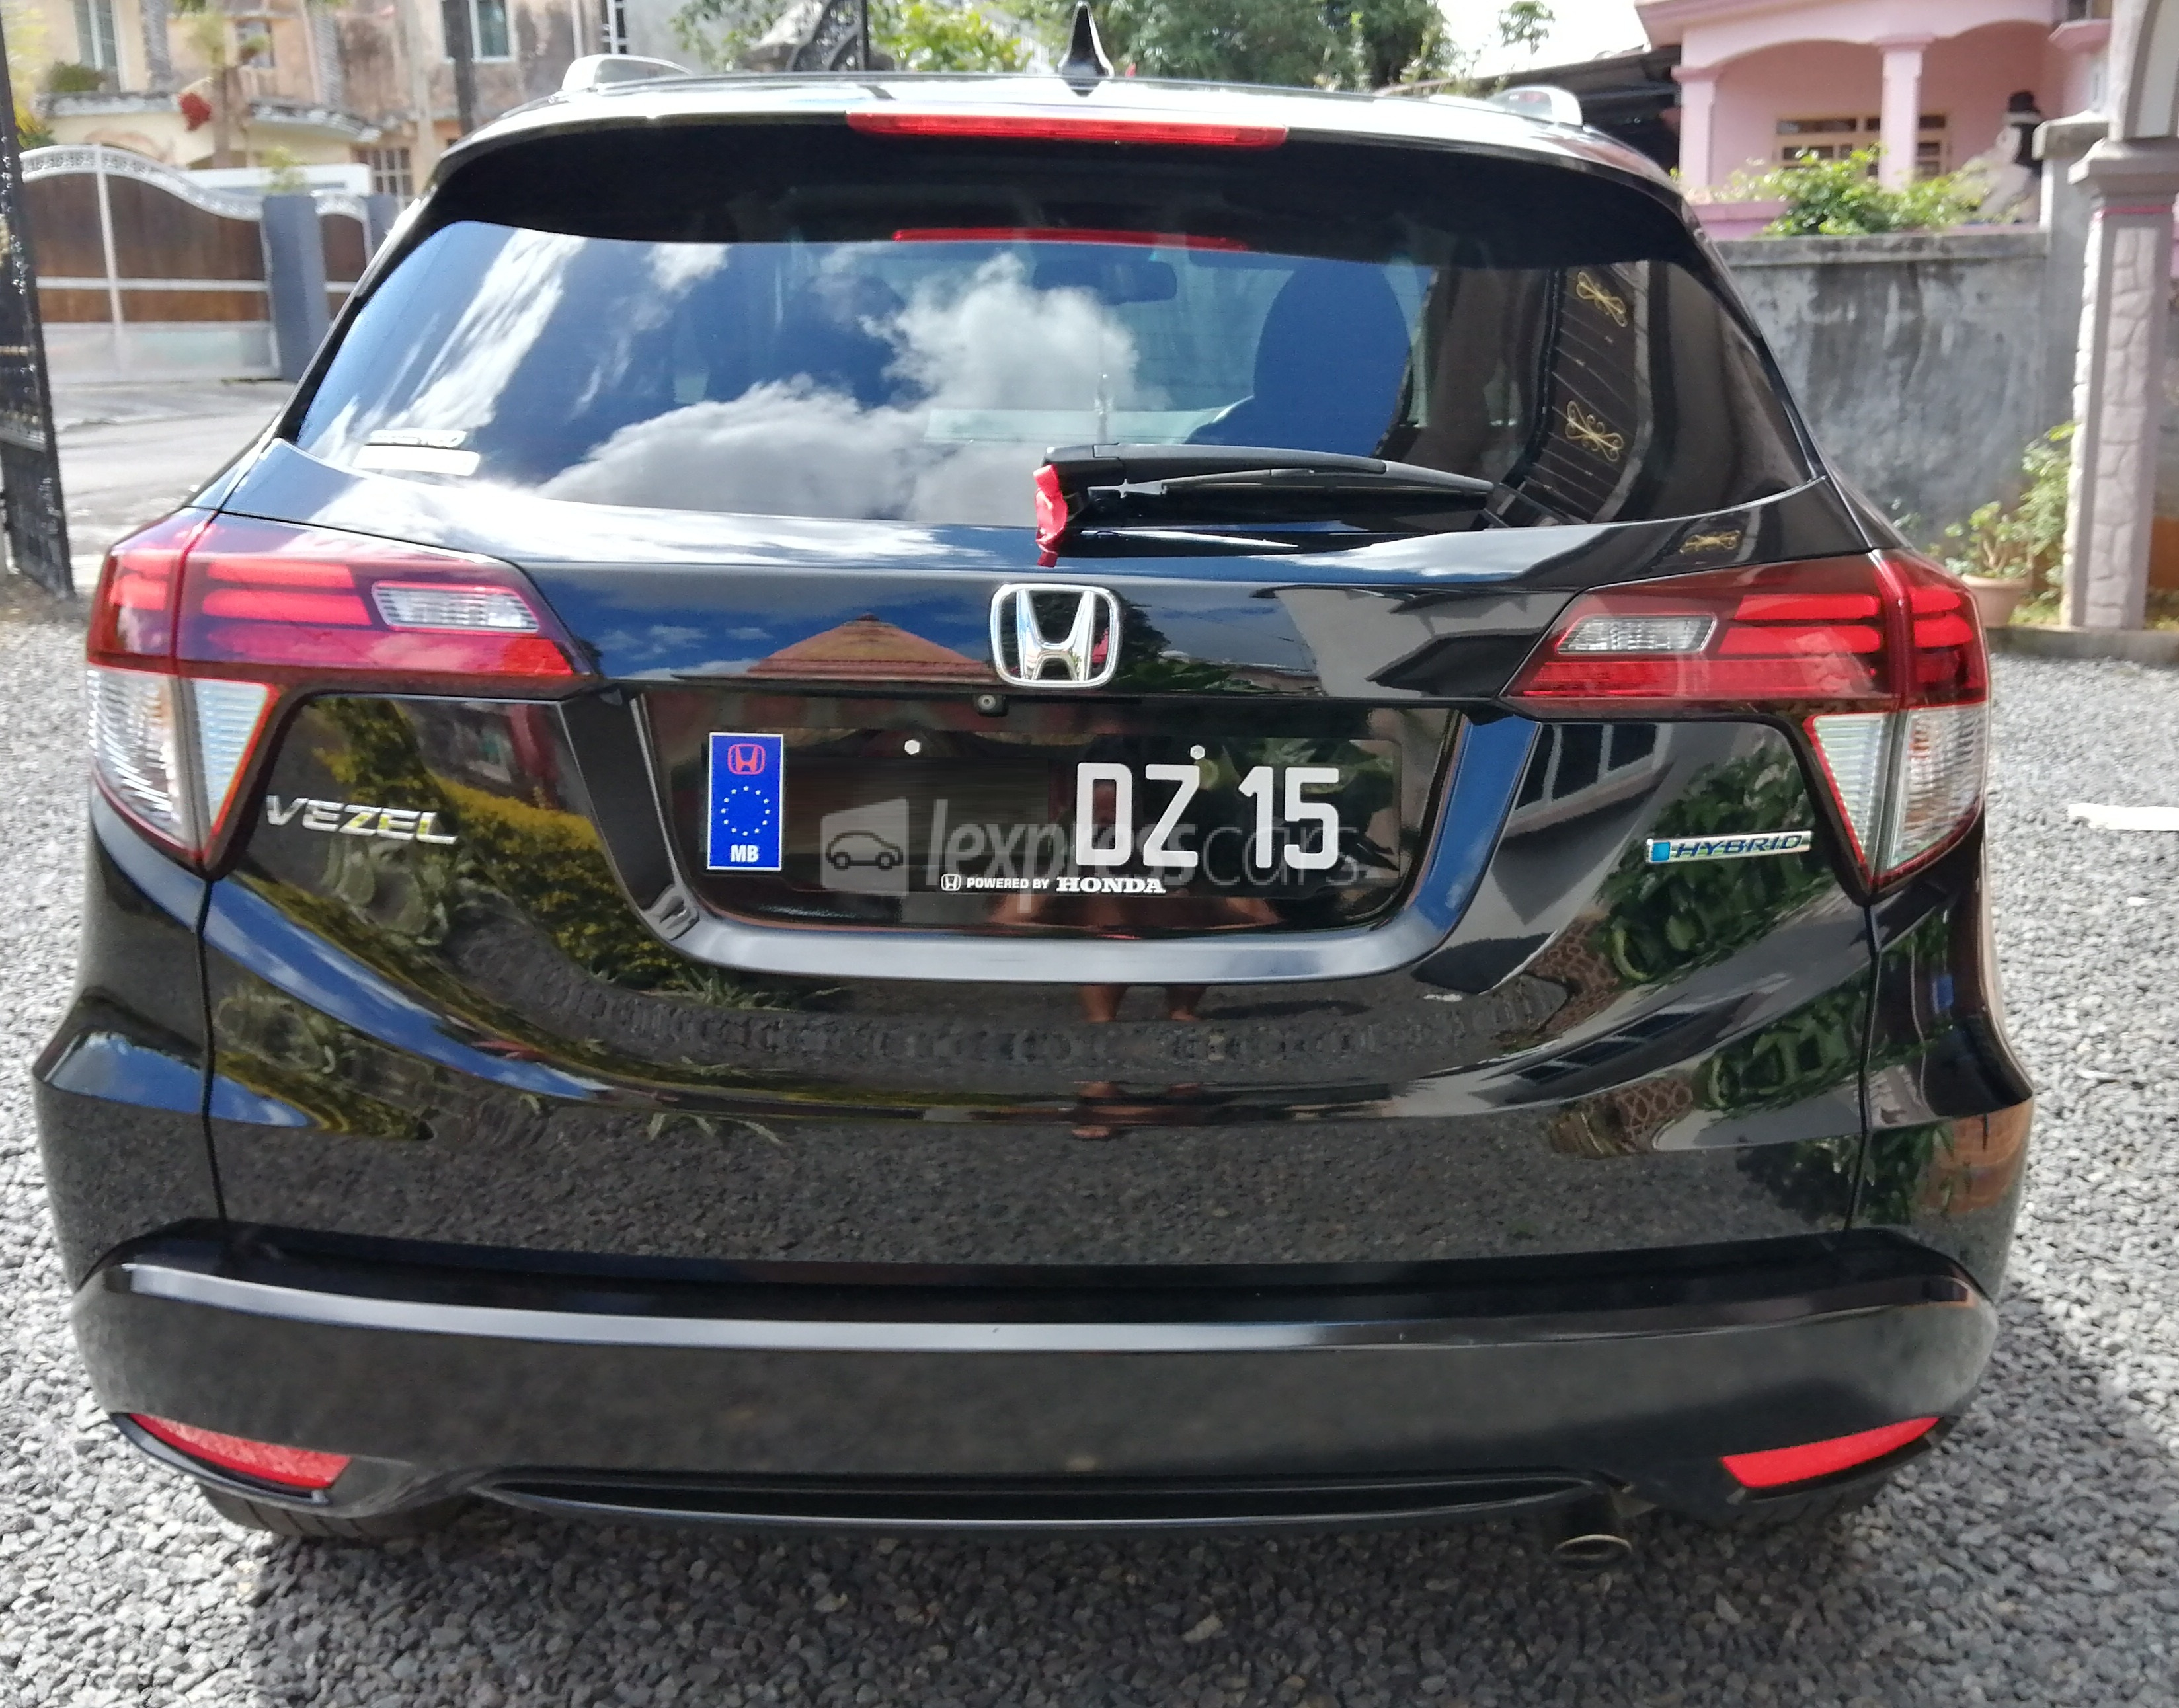 Second-Hand Honda Vezel / HR-V 2015 - lexpresscars.mu